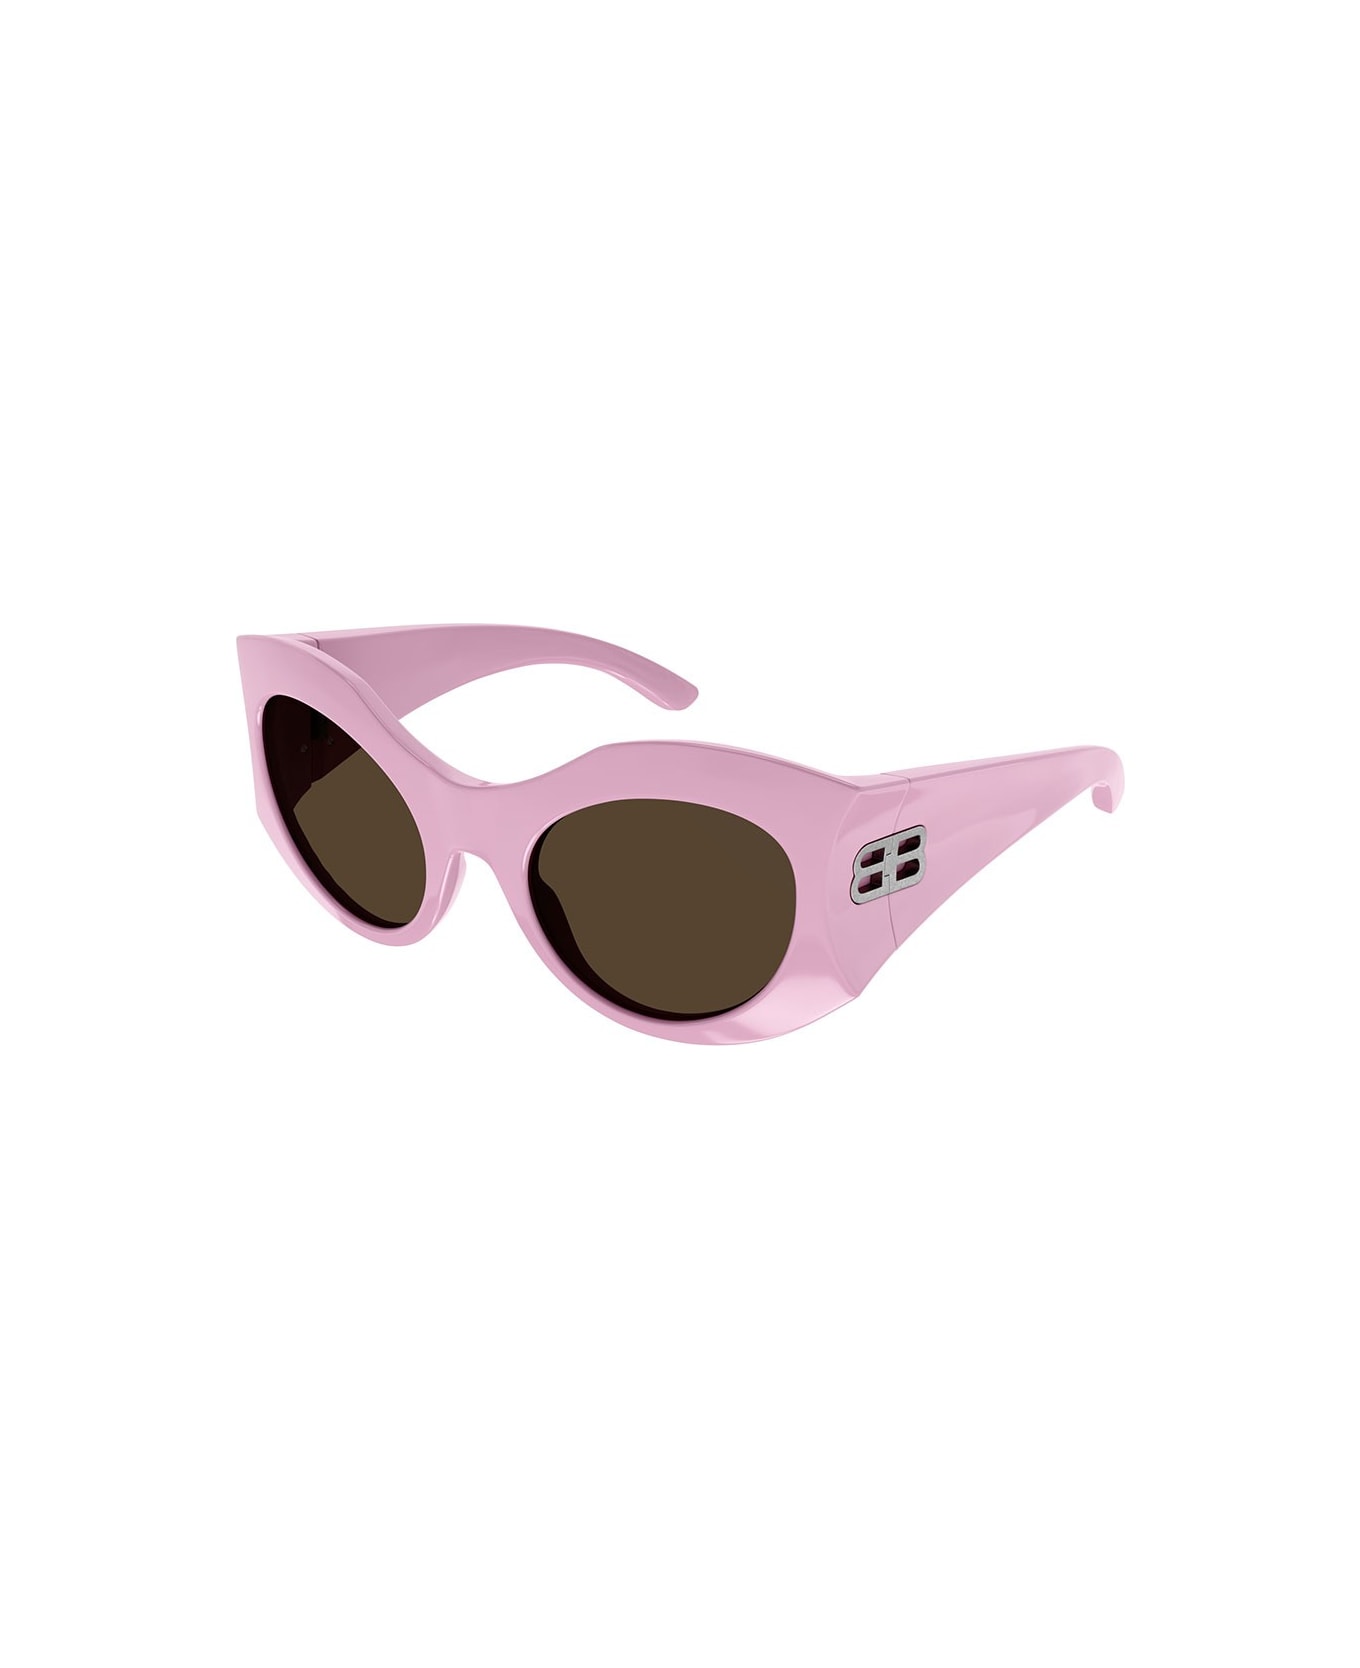 Balenciaga Eyewear Bb0256s Sunglasses - Pink Pink Brown